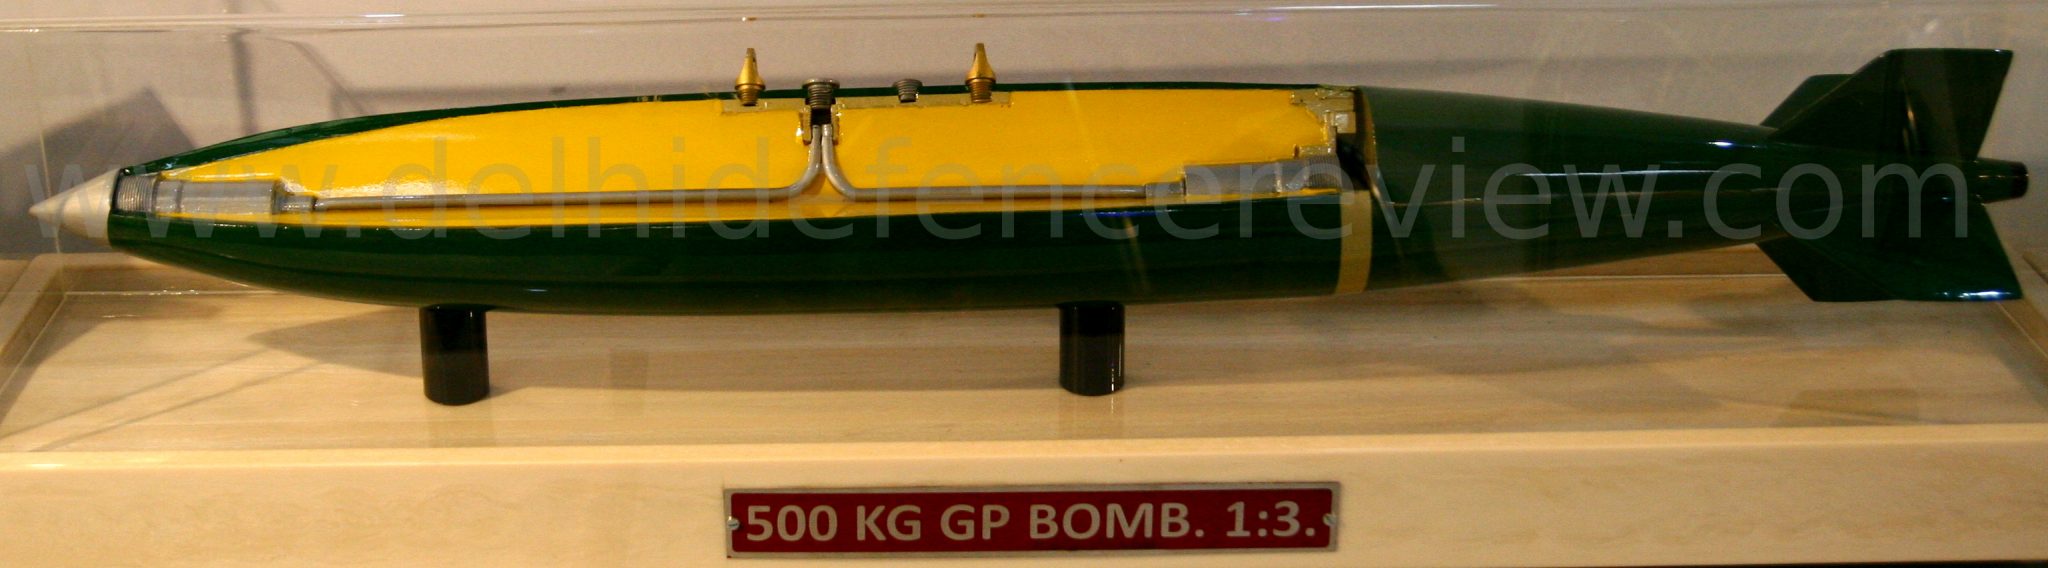 500kg-GP-Bomb.jpg